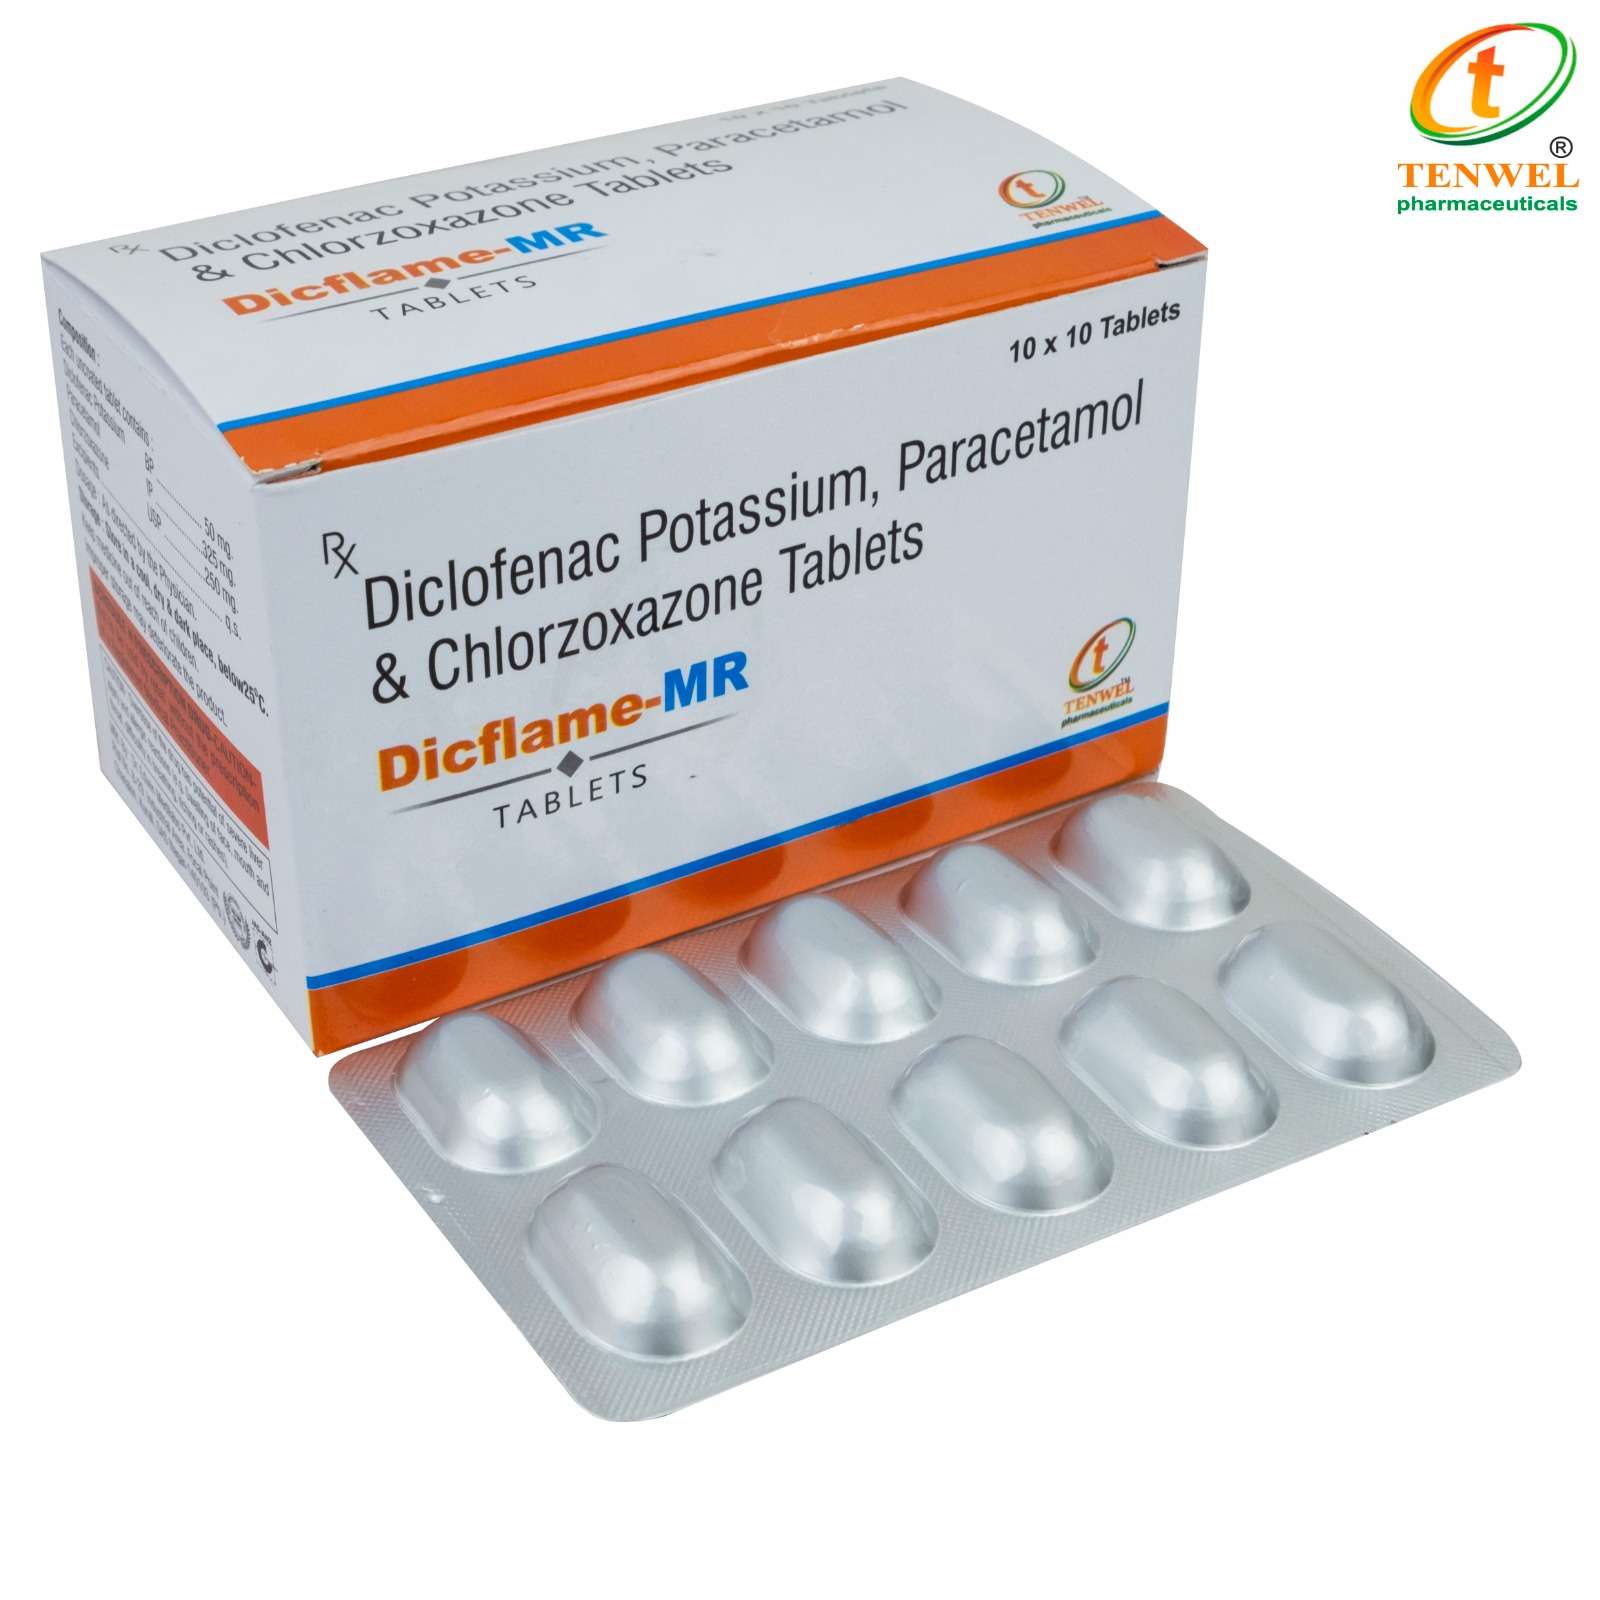 diclofenac potassium 50mg + paracetamol 325mg + chlorzoxazone 250mg